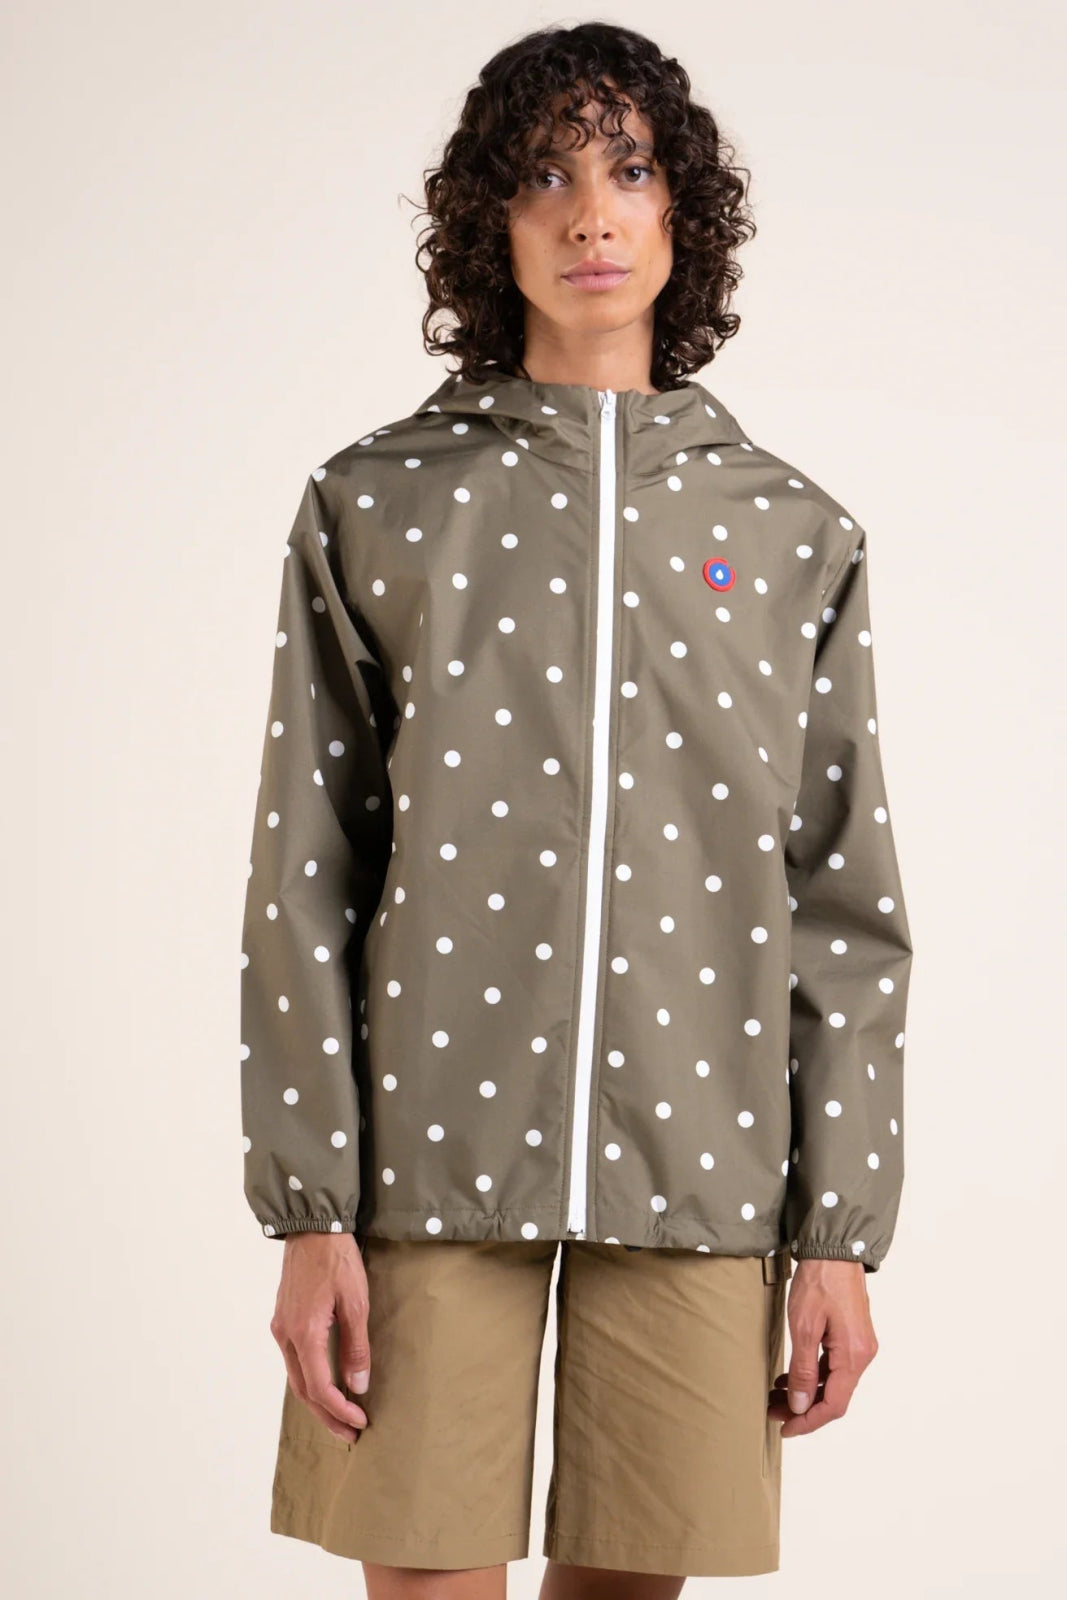 Passy - Raincoat Windbreaker Short - Flotte #couleur_pois-olive